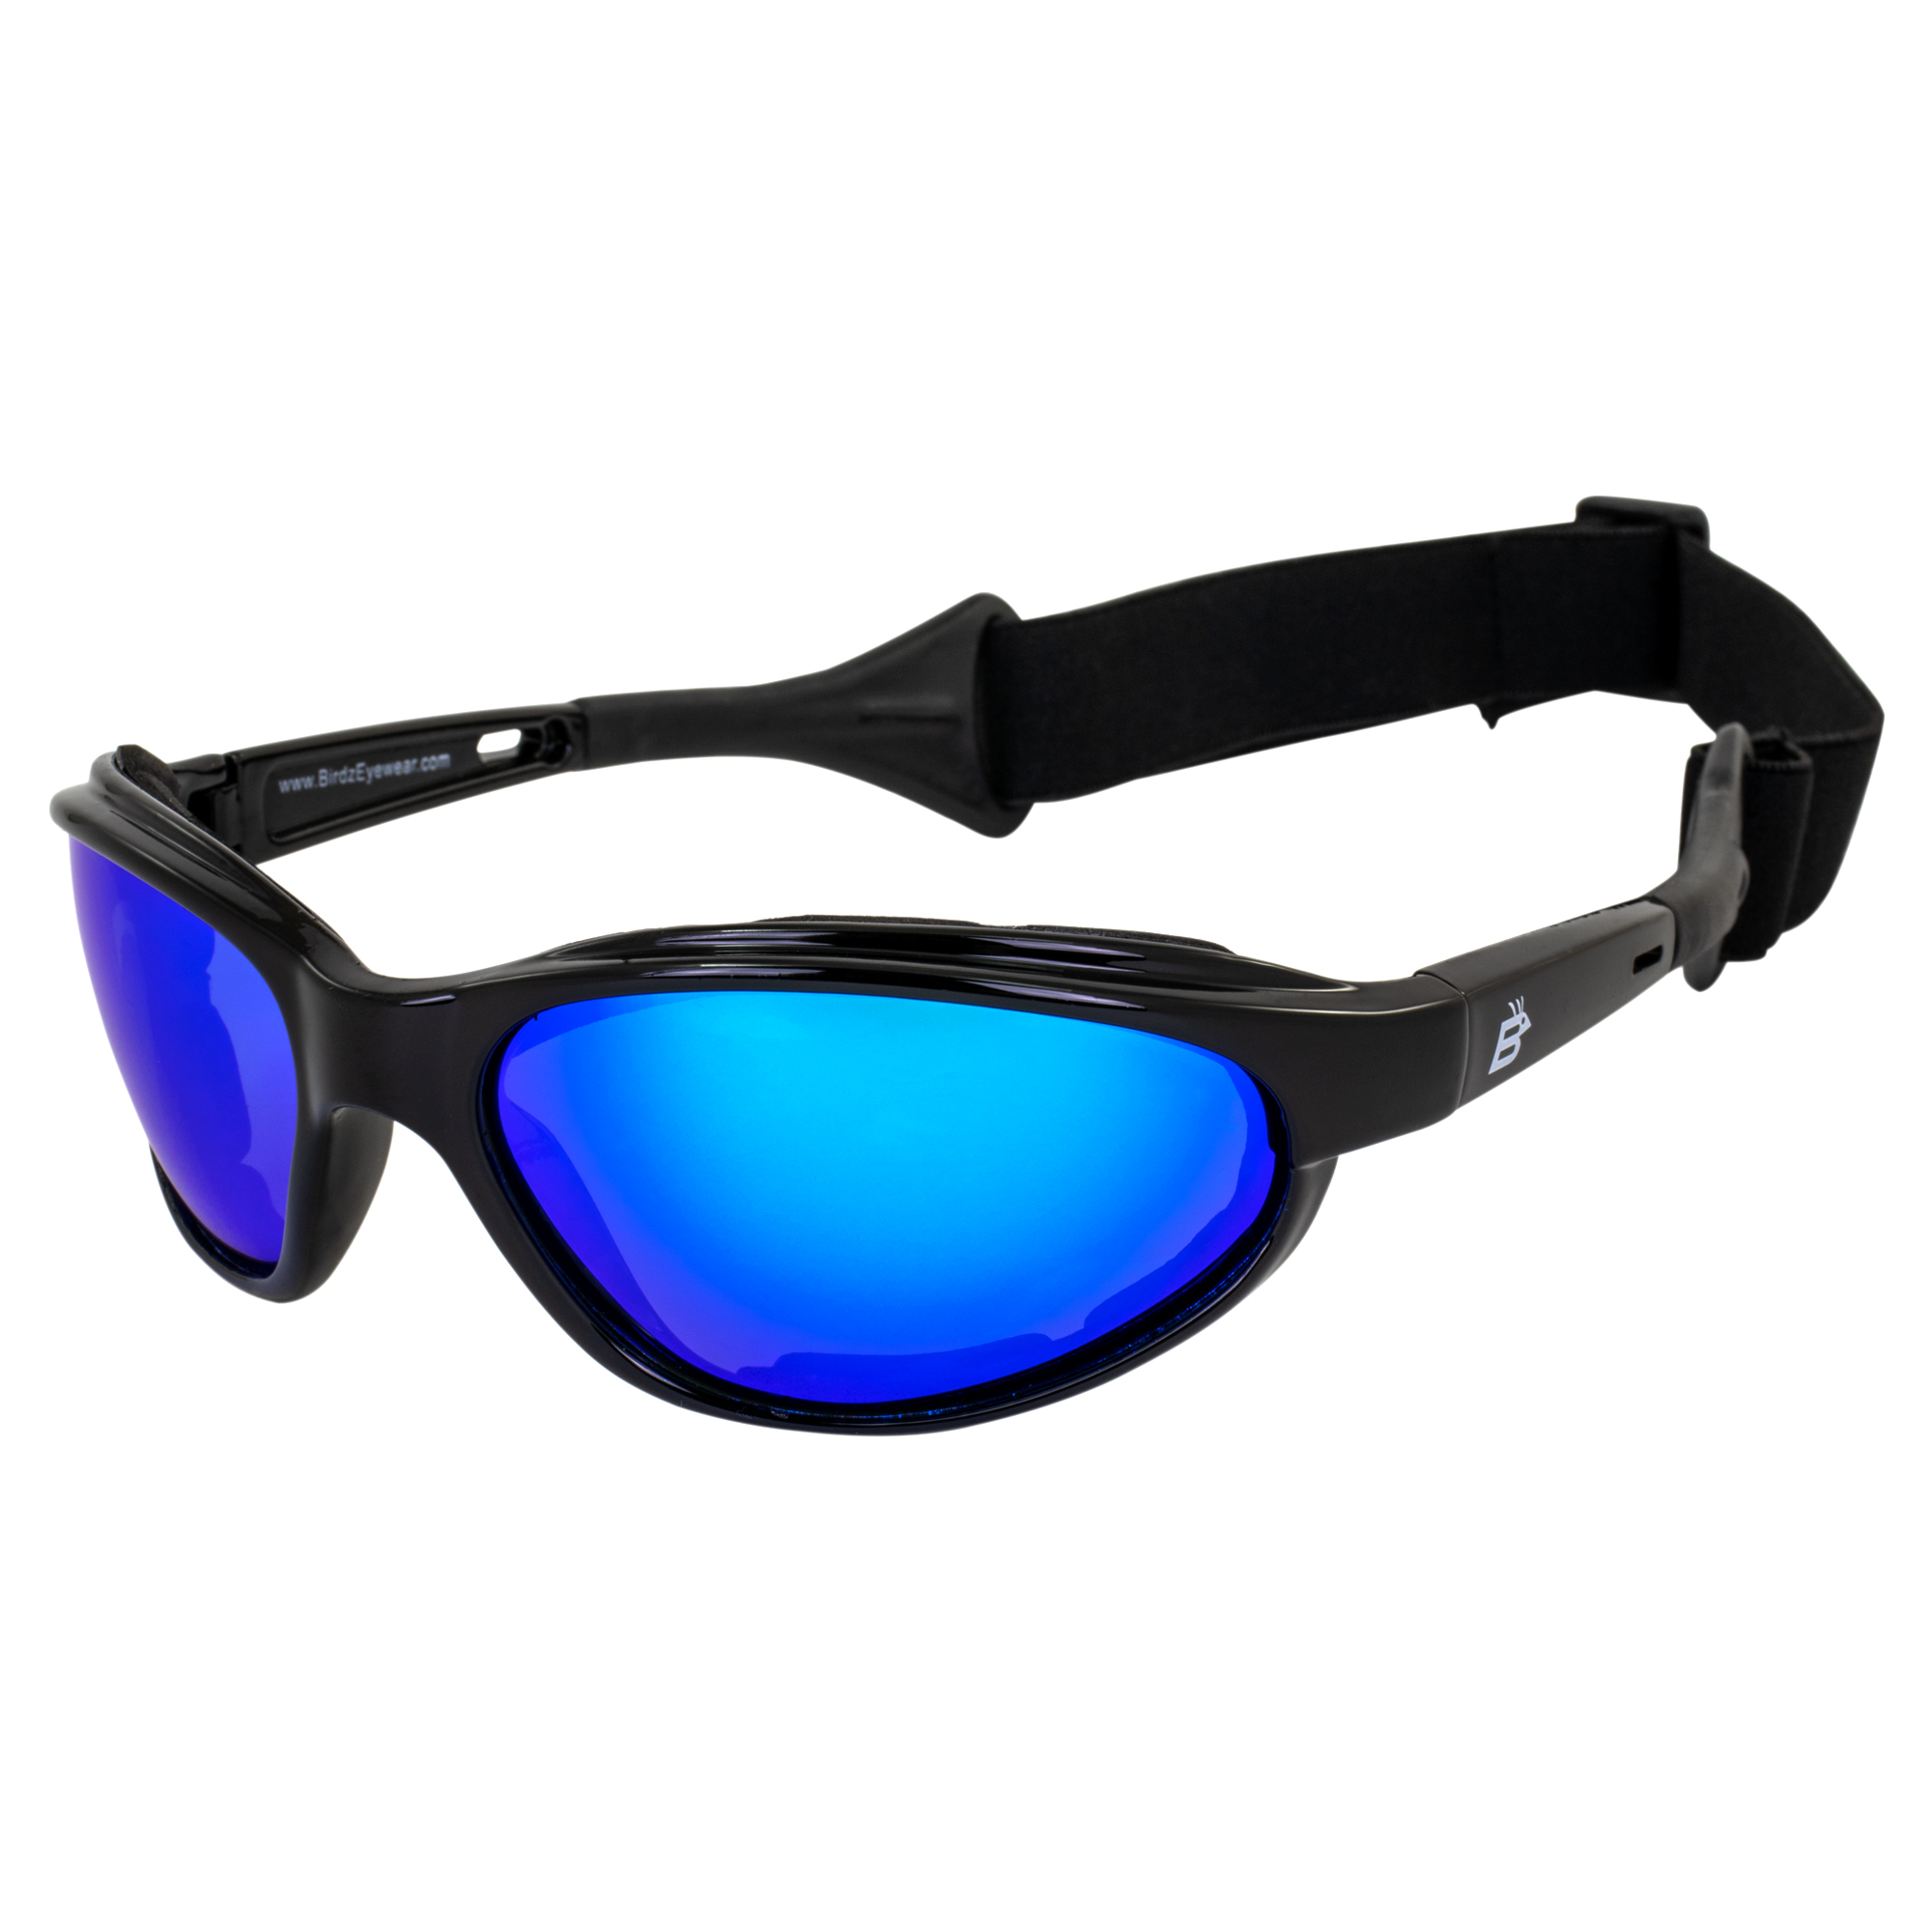 Birdz Eyewear Sail Padded Jetski Sunglasses Goggles Polarized Sports Watersports Boating Fishing for Men or Women Black Frame w/Blue Mirror Lens - image 1 of 6